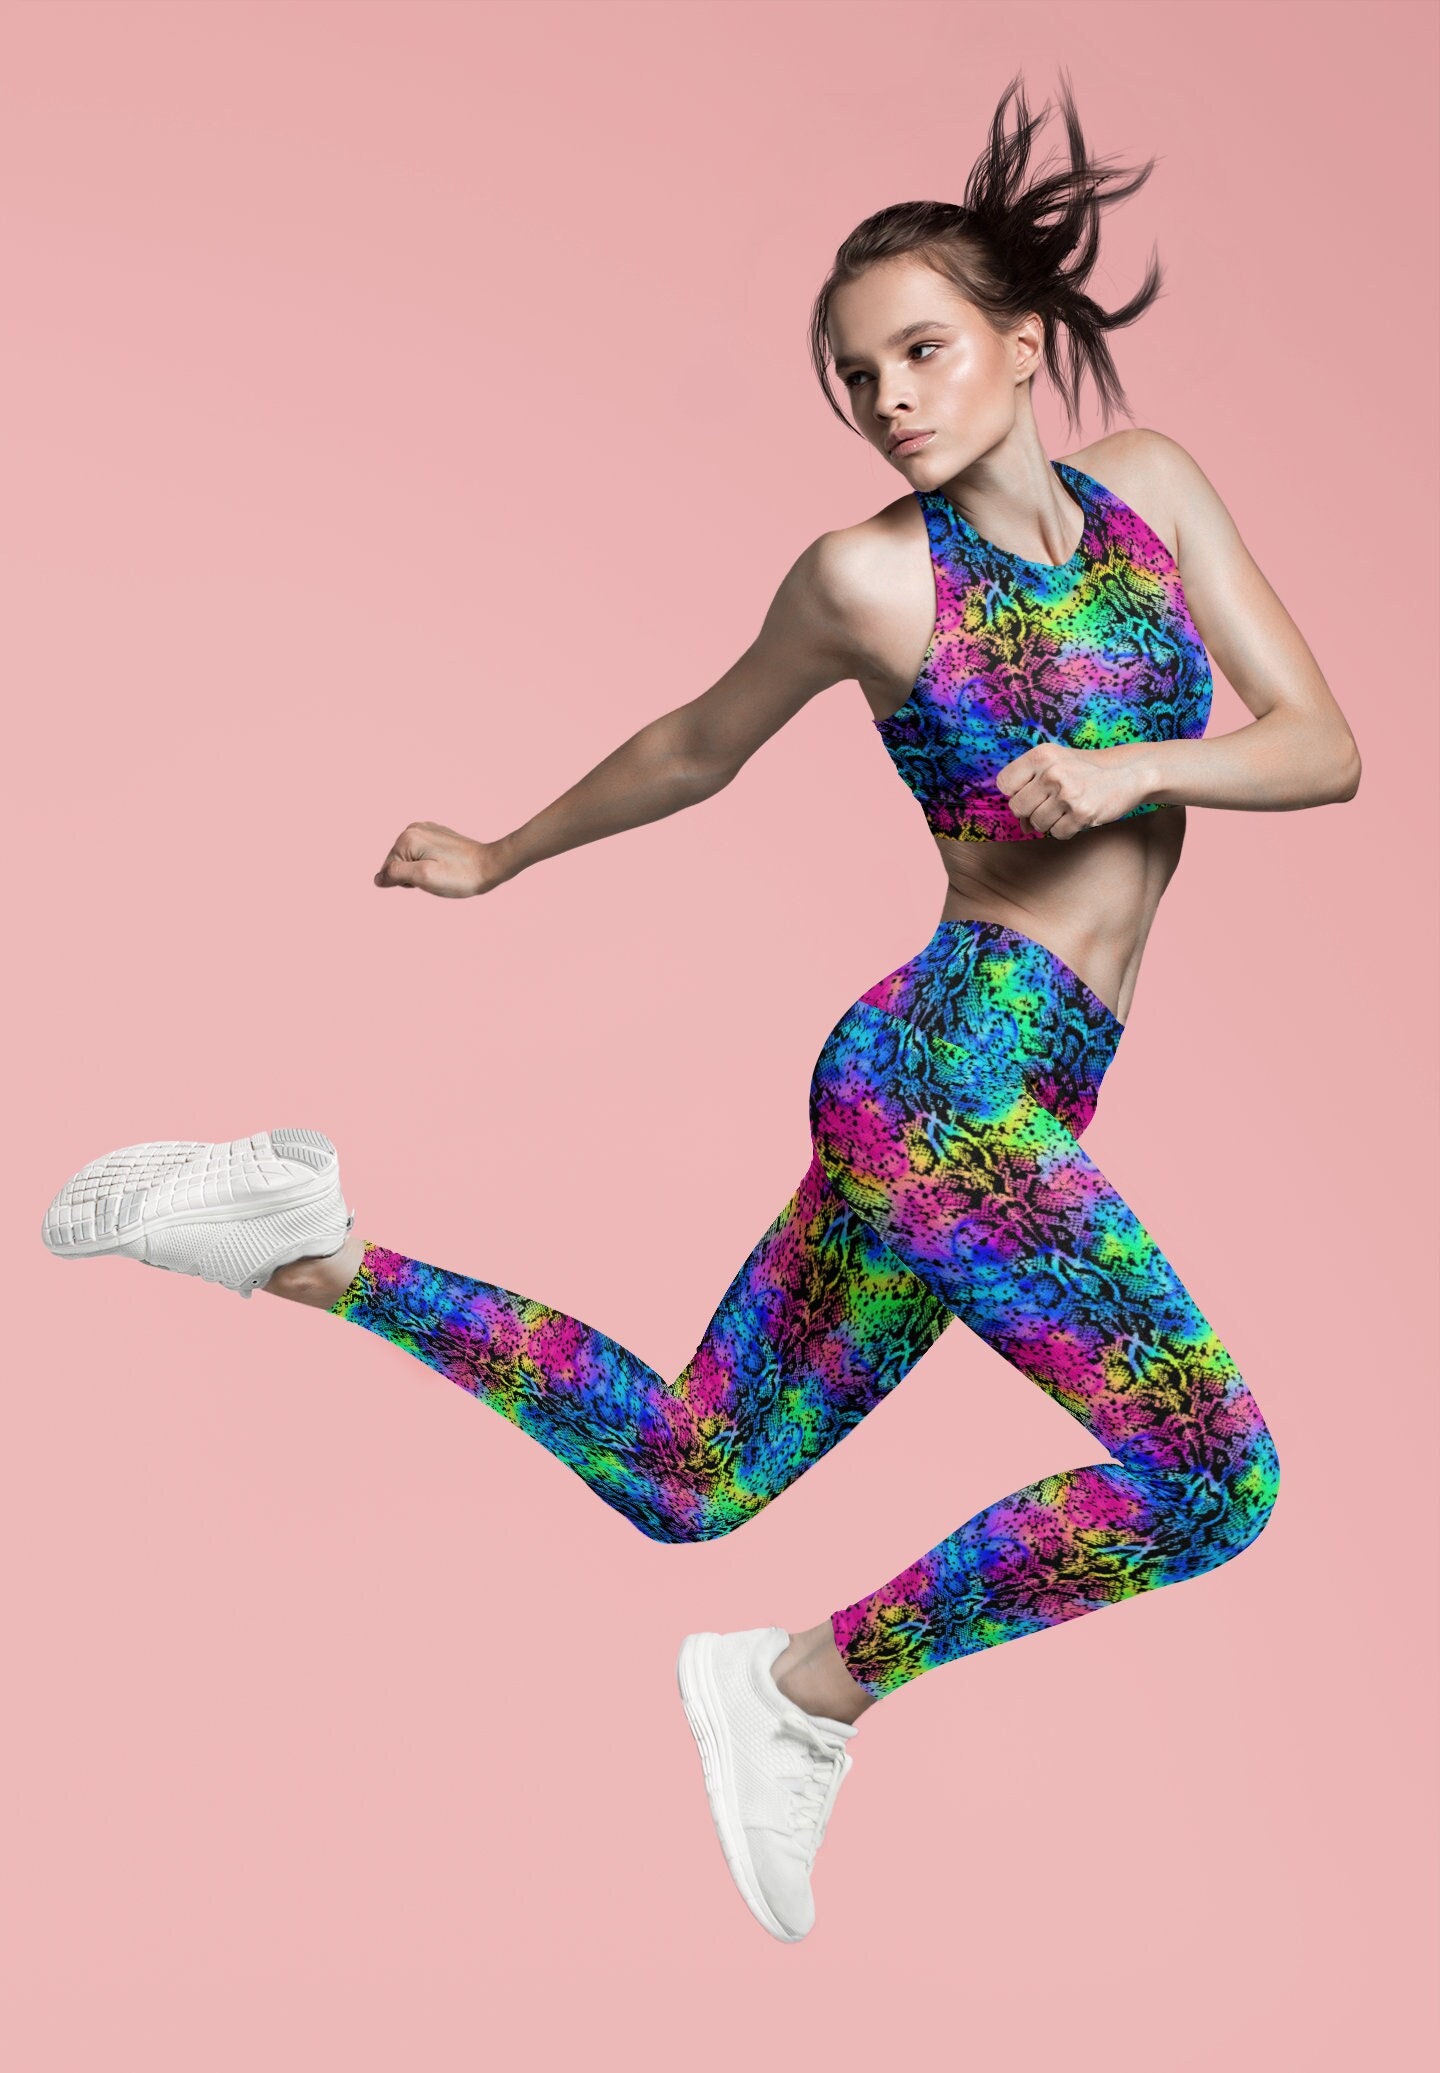 Colorful Sports Wear Woman, Crossfit Bodysuit, Dance Costume Woman